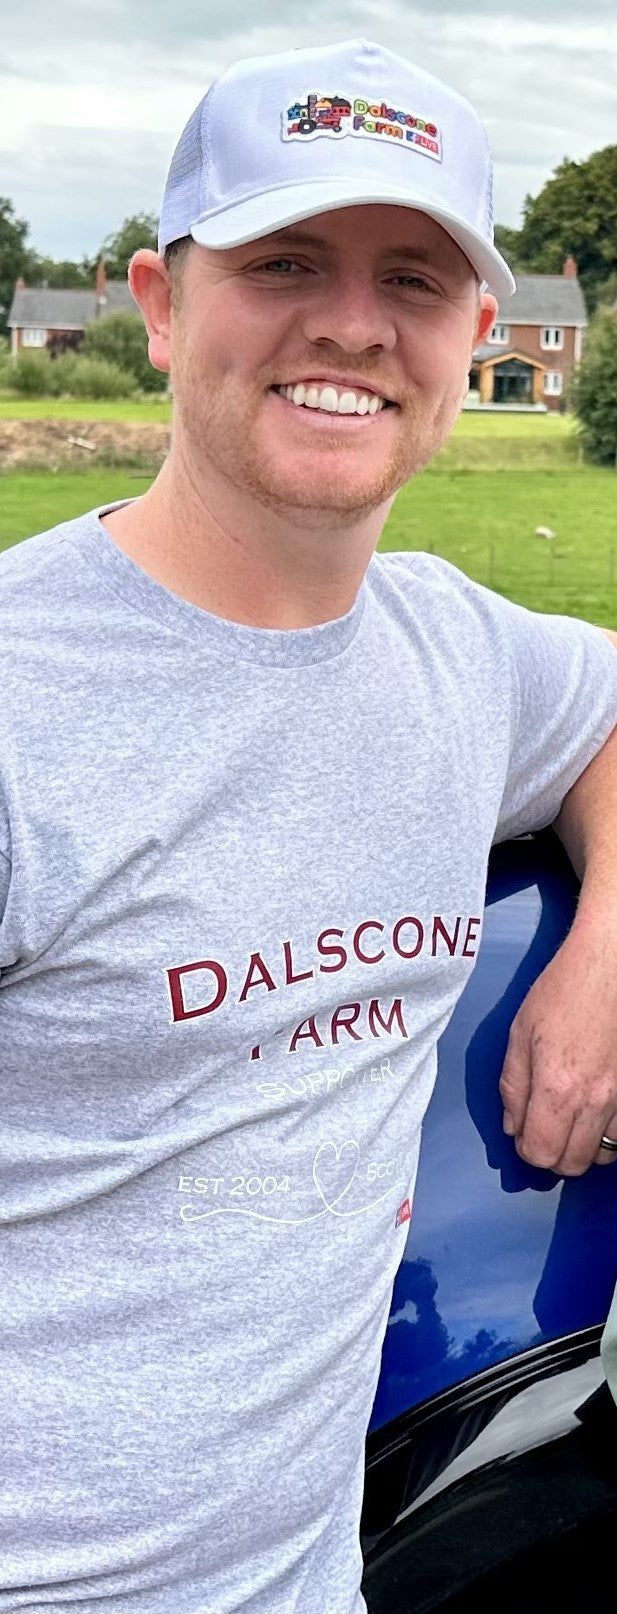 Dalscone Baseball Cap